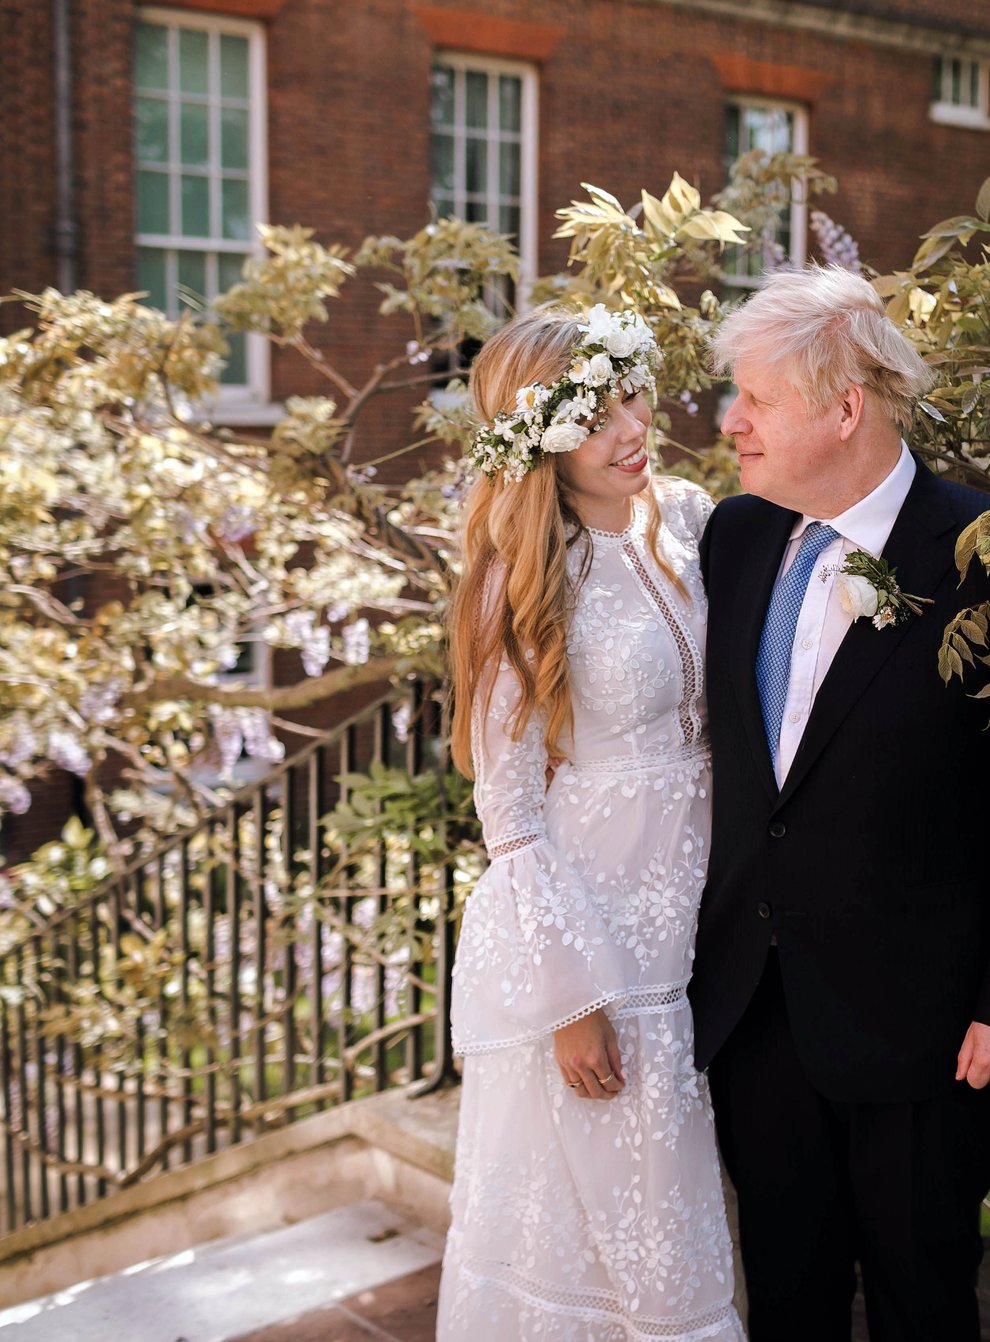 <p>Boris Johnson’s wedding</p>